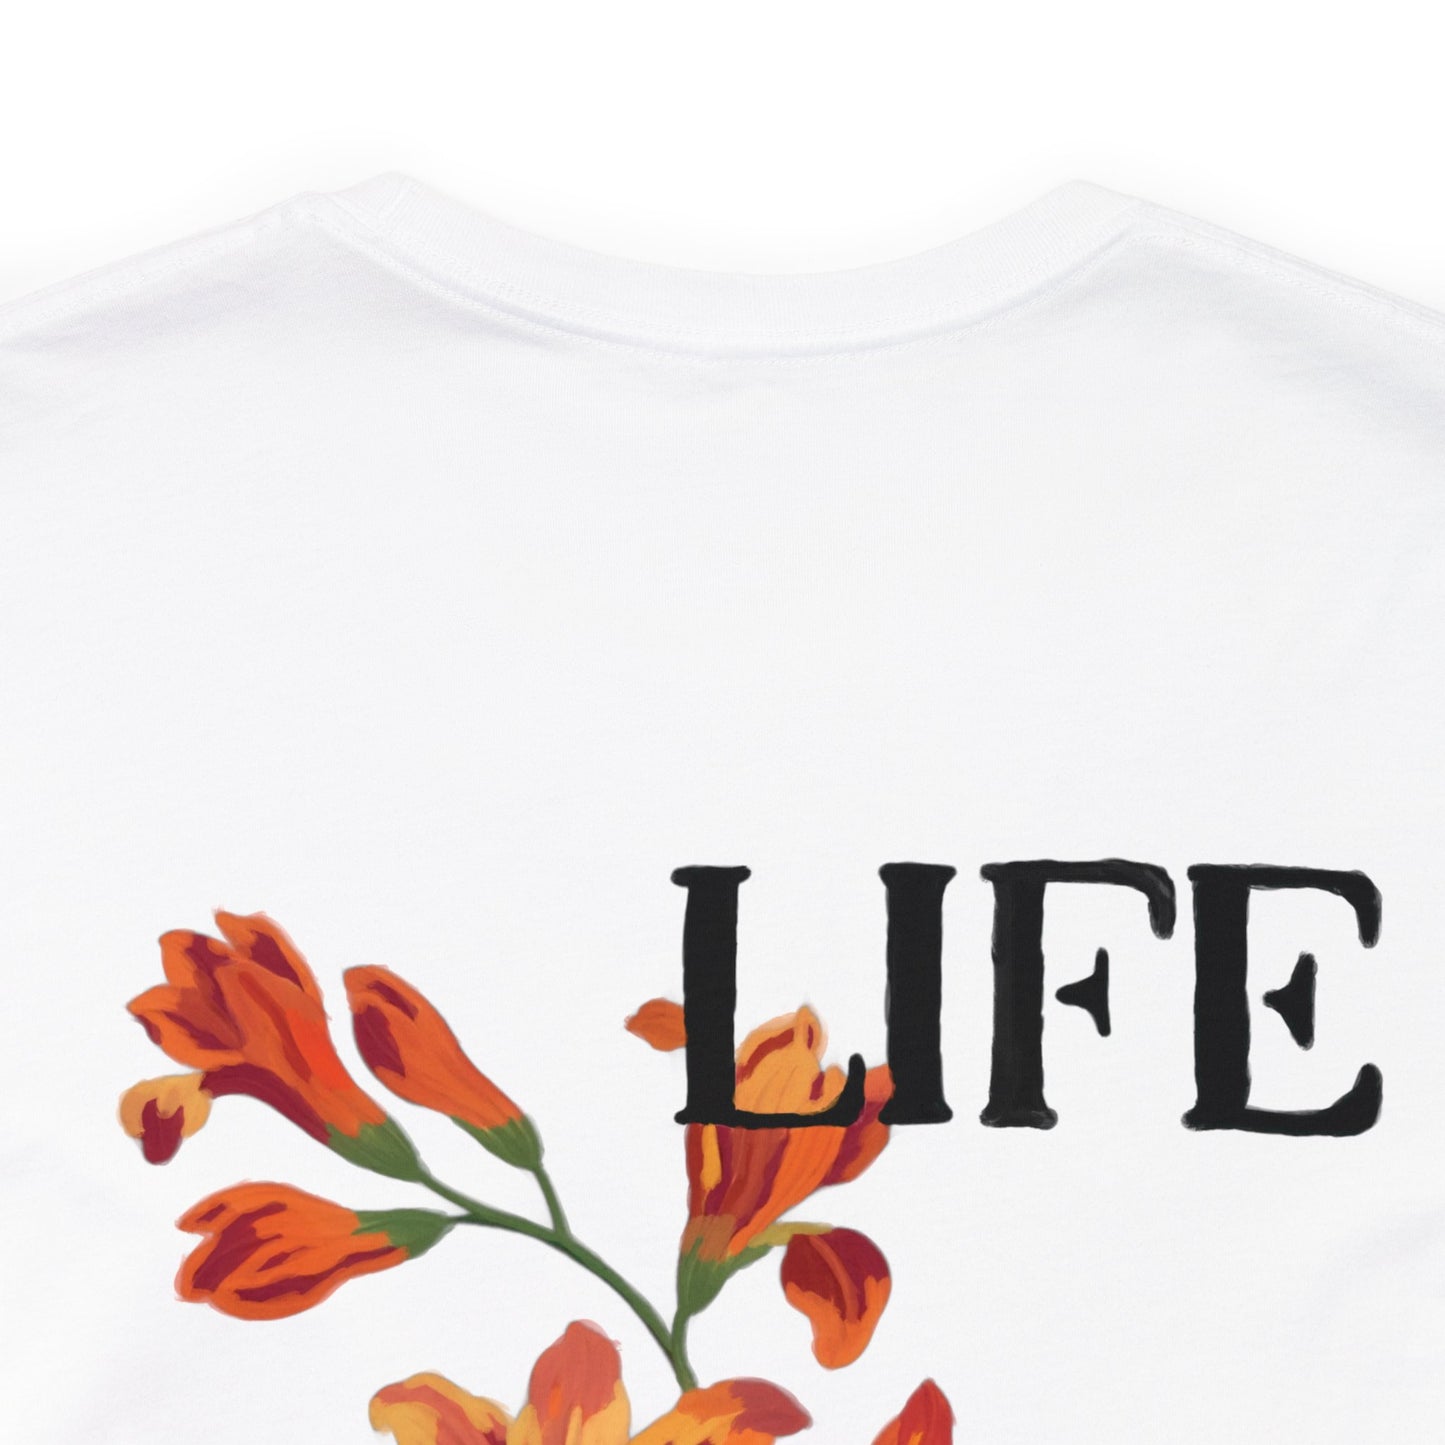 Life Is Good - Unisex T-shirt